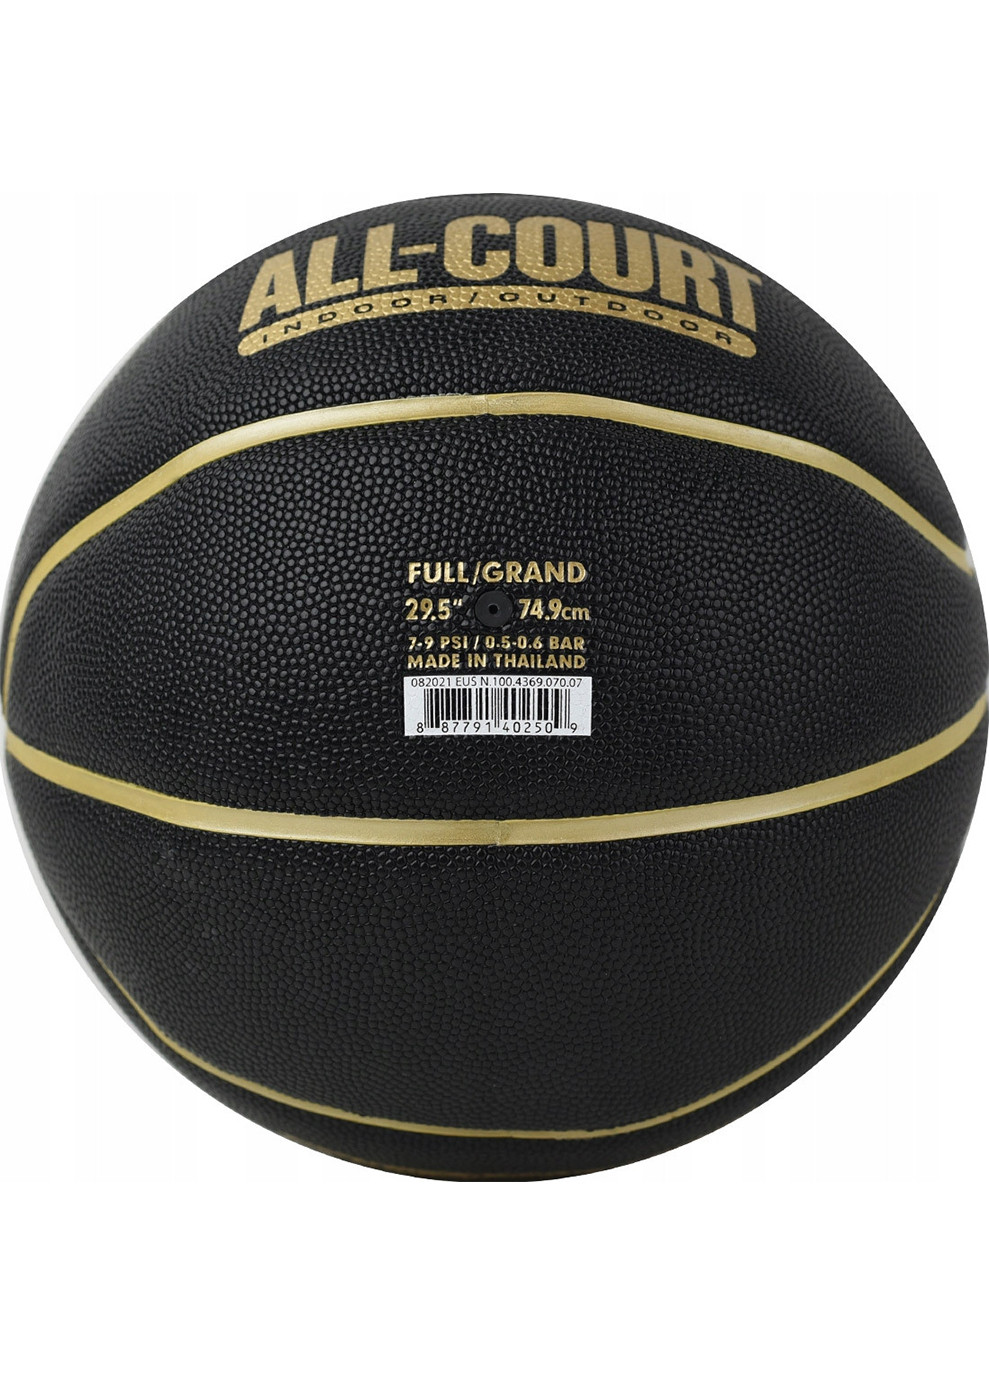 М'яч баскетбольний Everyday All Court 8P р. 7 Black/Metallic Gold/Black/Metallic Gold Nike (259296595)